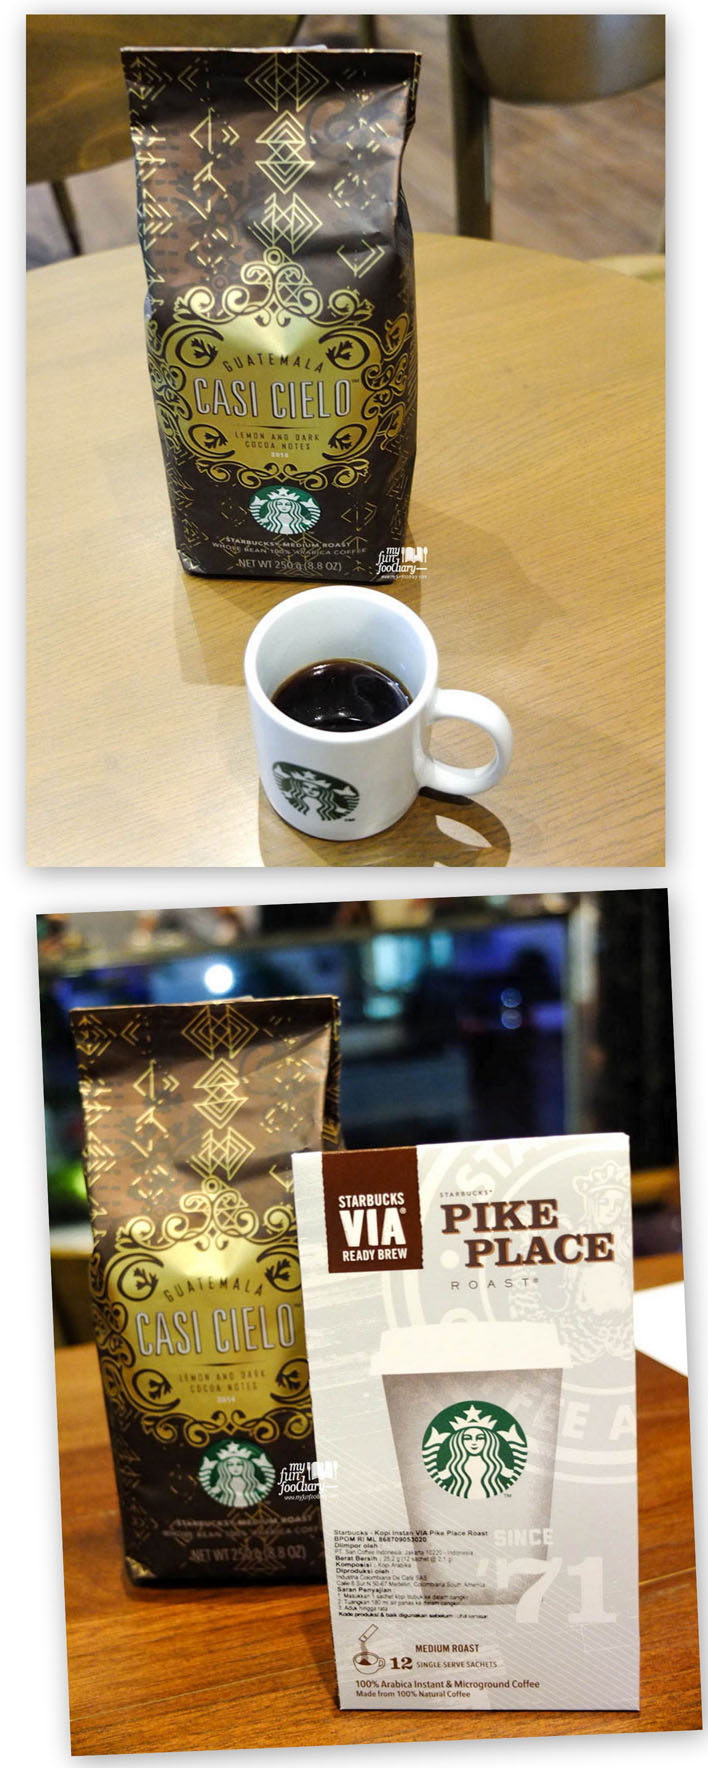 NEW Starbucks Guatemala Casi Cielo & Starbucks VIA Pike Place